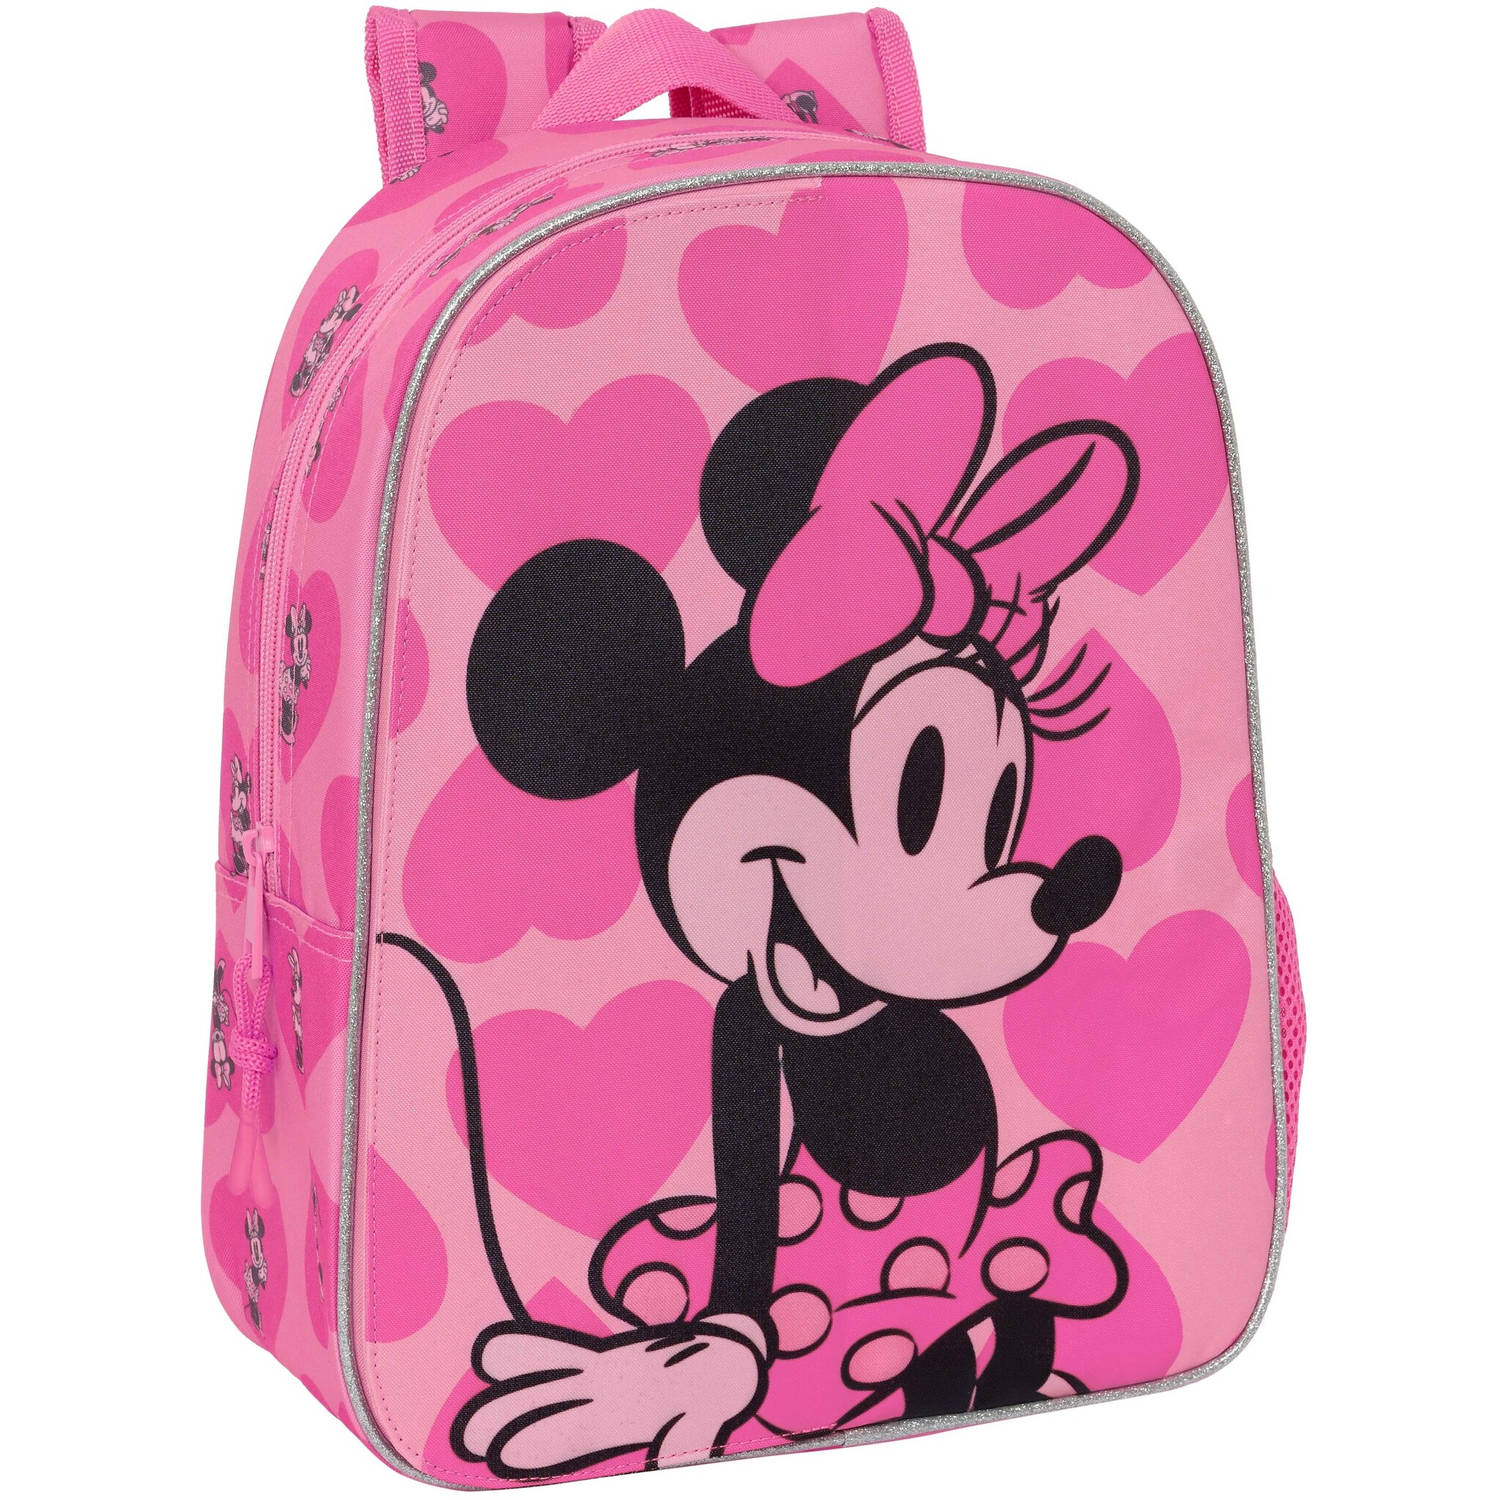 Disney Minnie Mouse Rugzak, Loving - 34 x 26 x 11 cm - Polyester